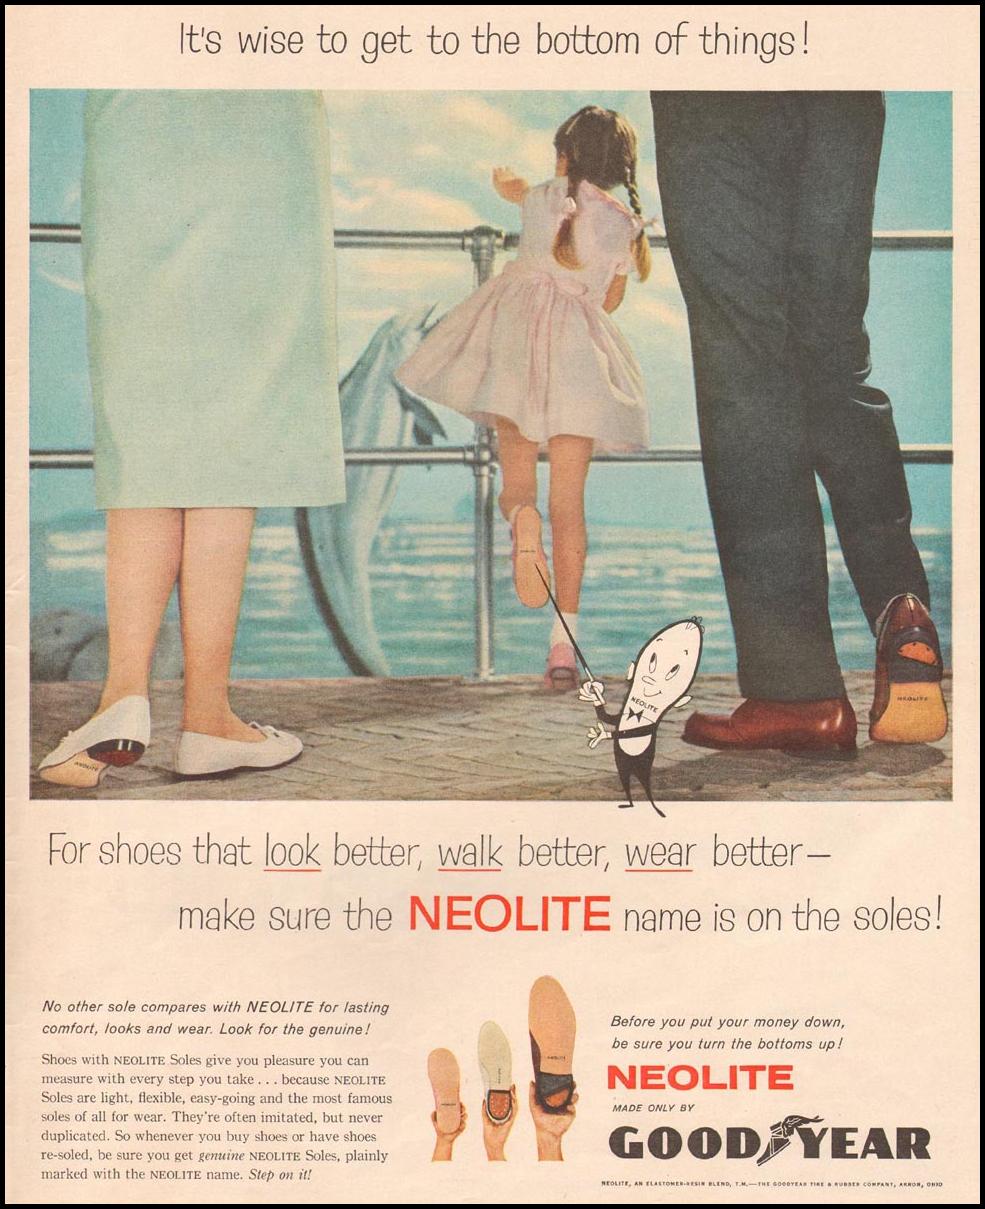 NEOLITE SHOE SOLES
LIFE
09/15/1958